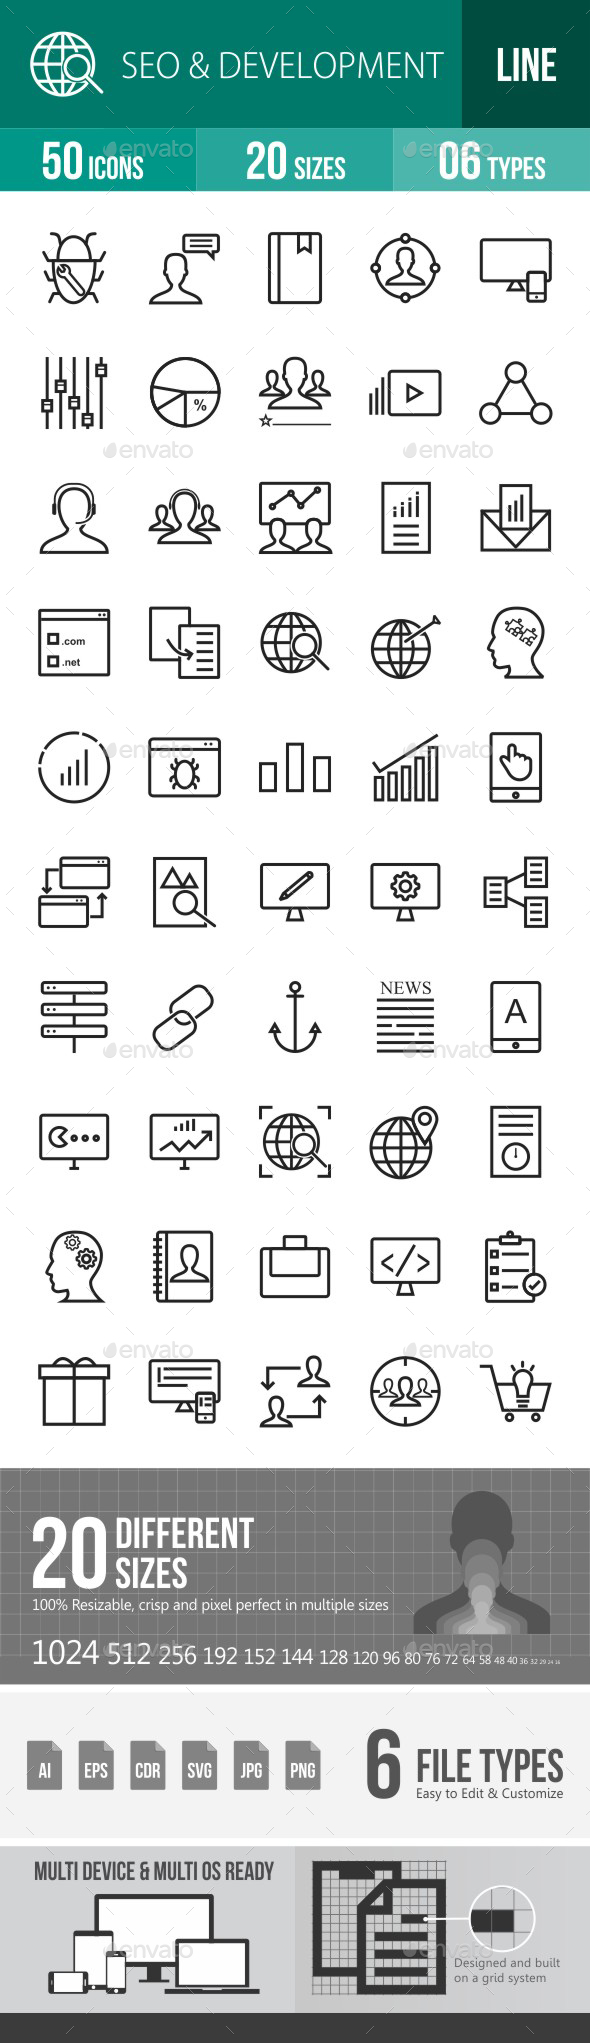 SEO & Development Services Line Icons